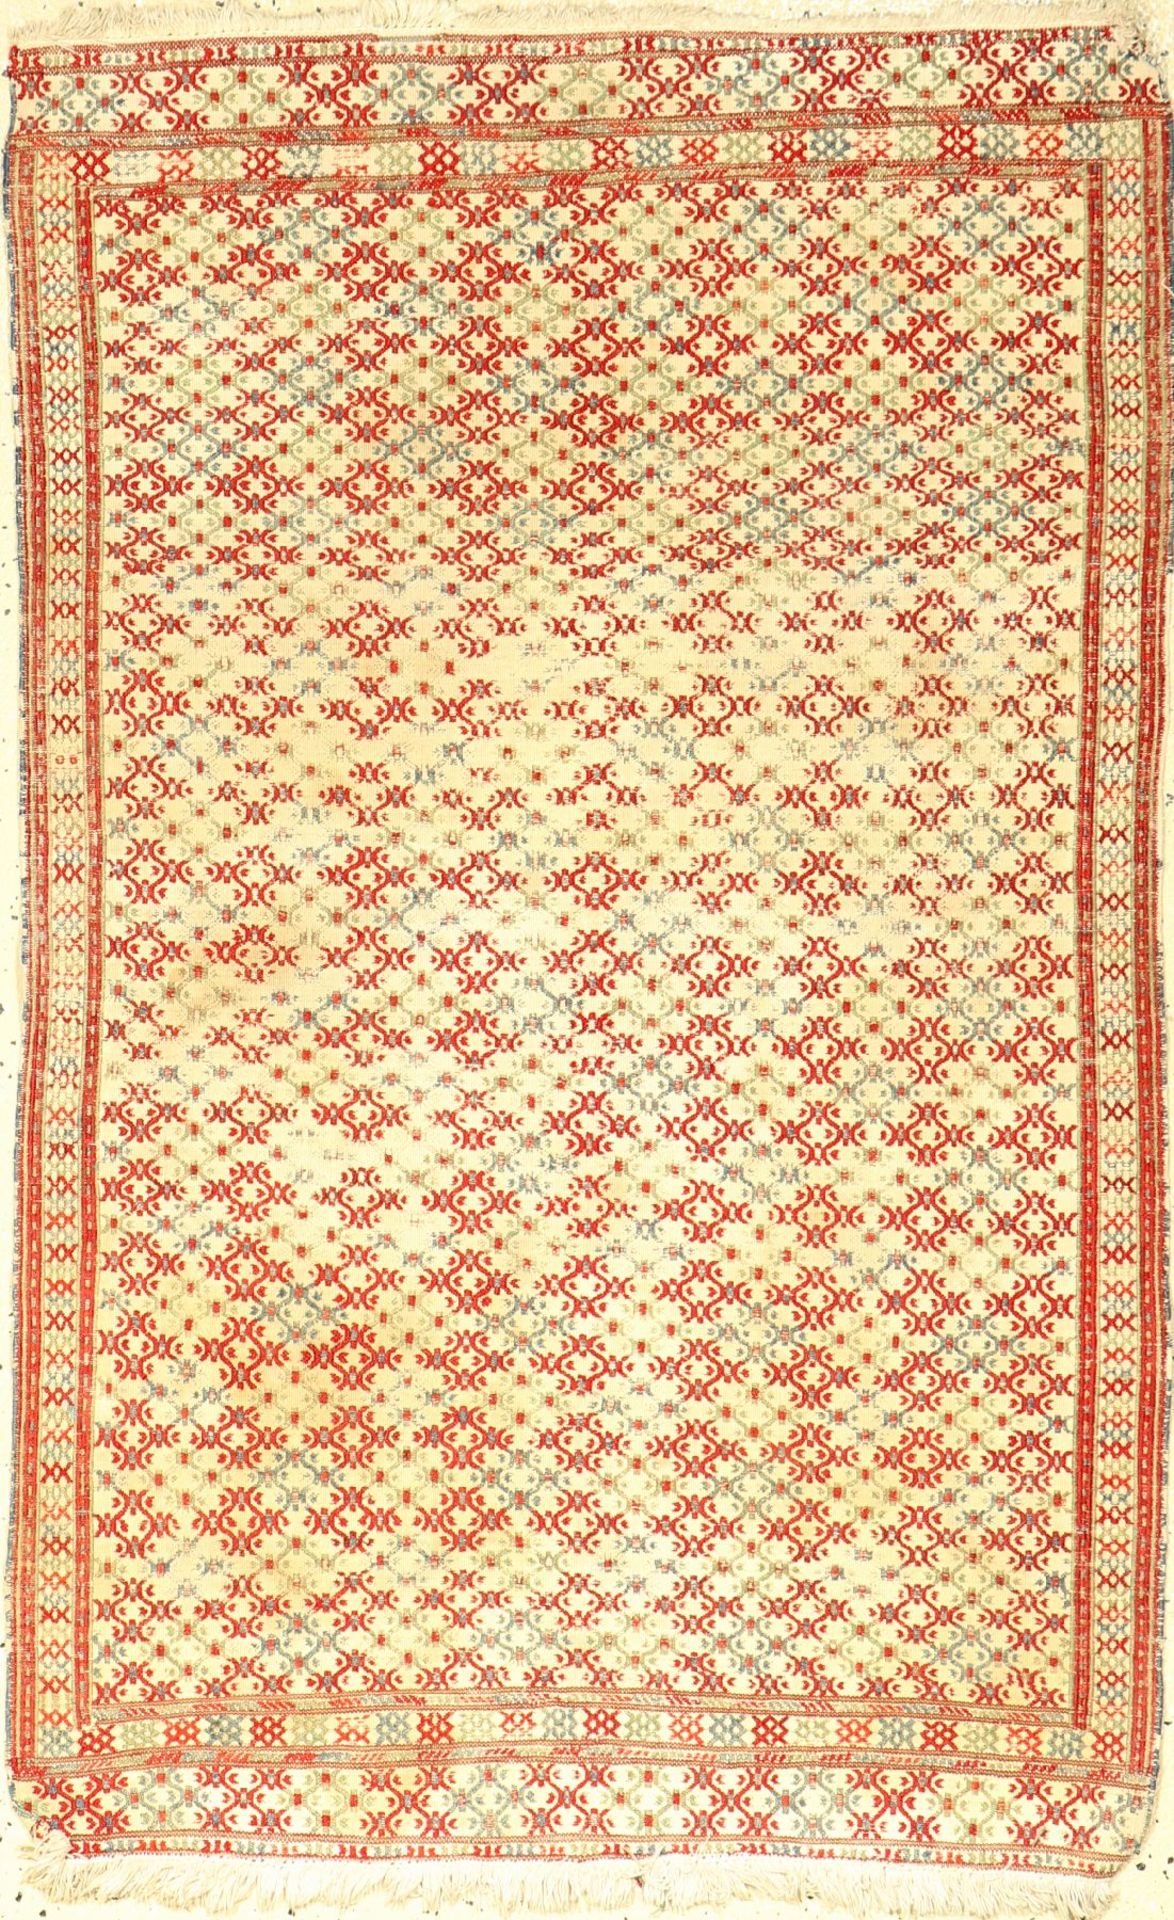 Zili, Anatolien, um 1930-40, Wolle auf Wolle, ca. 121 x 77 cm, EHZ: 3Zili "Flatweave", Anatolia,